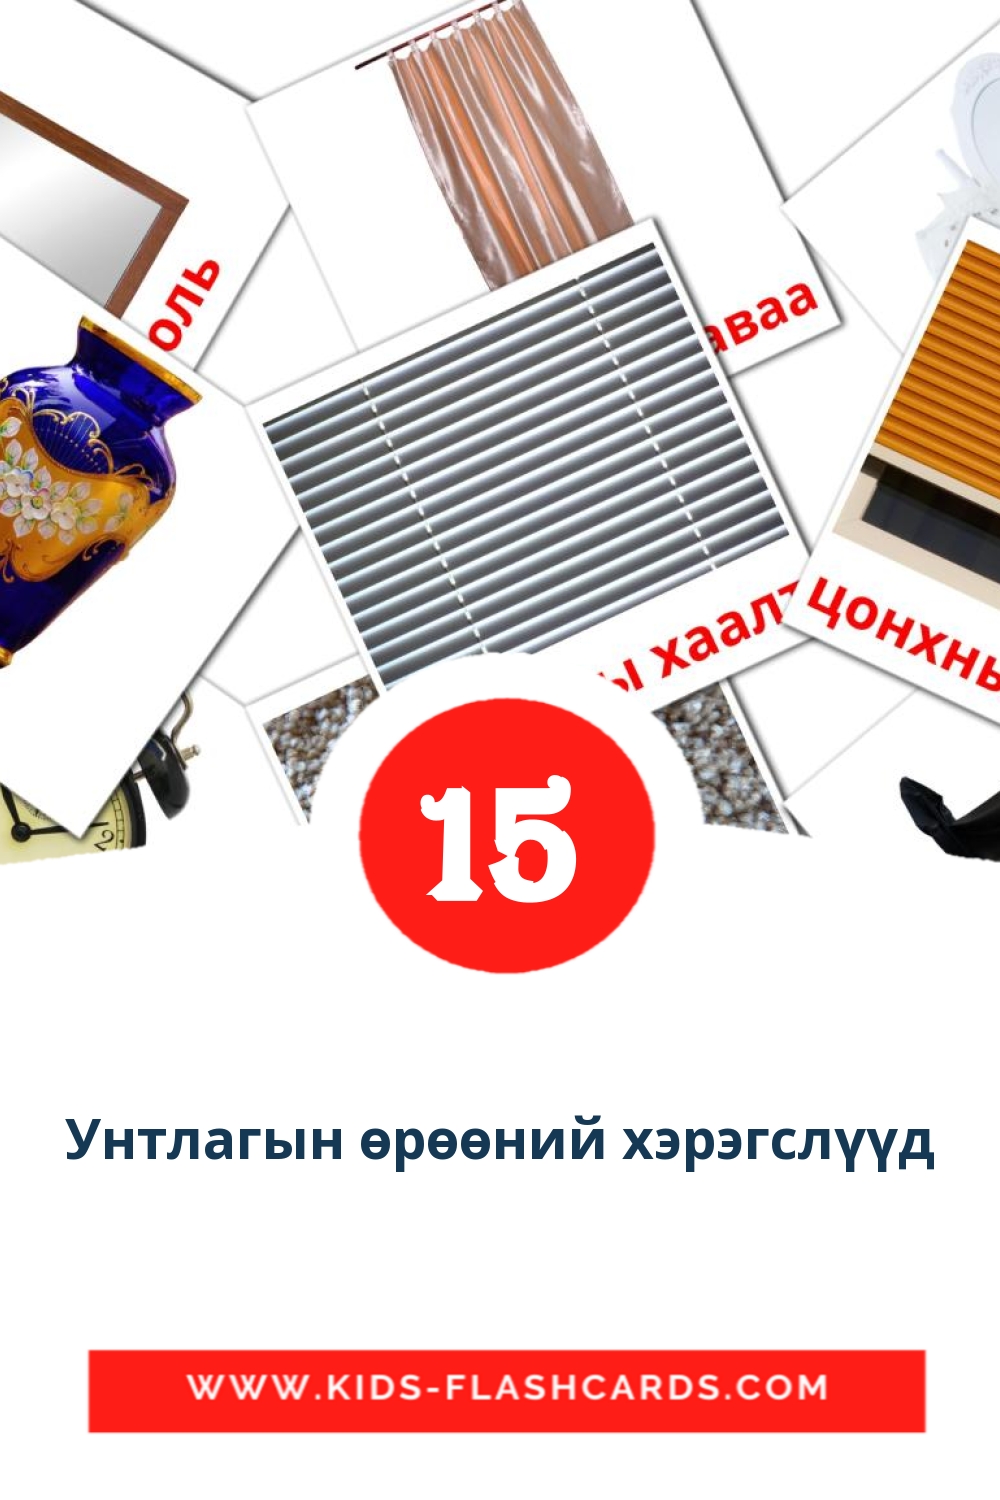 Унтлагын өрөөний хэрэгслүүд на монгольском для Детского Сада (15 карточек)